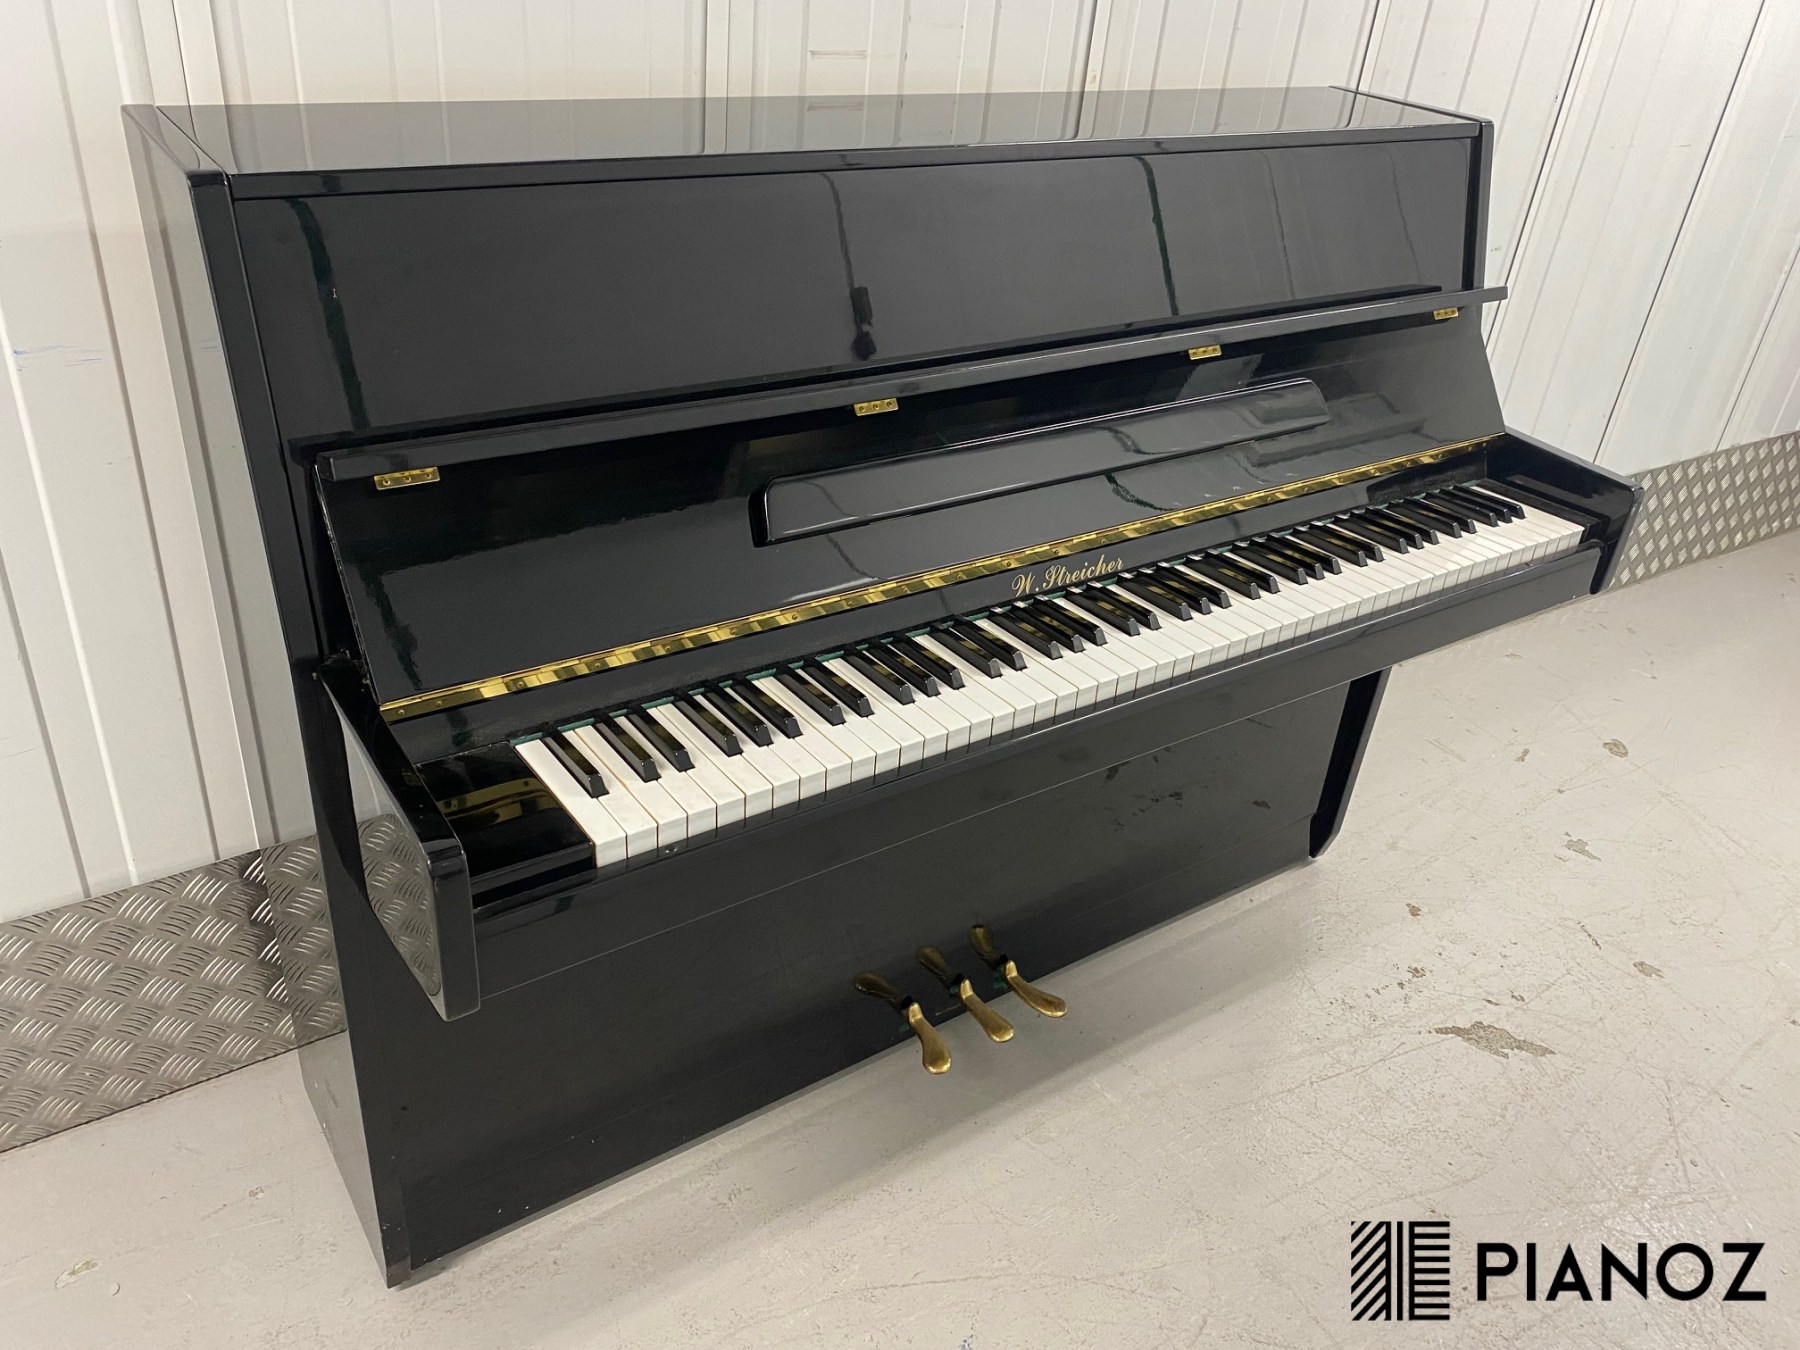 W Streicher 108 (Steinmayer) Upright Piano piano for sale in UK